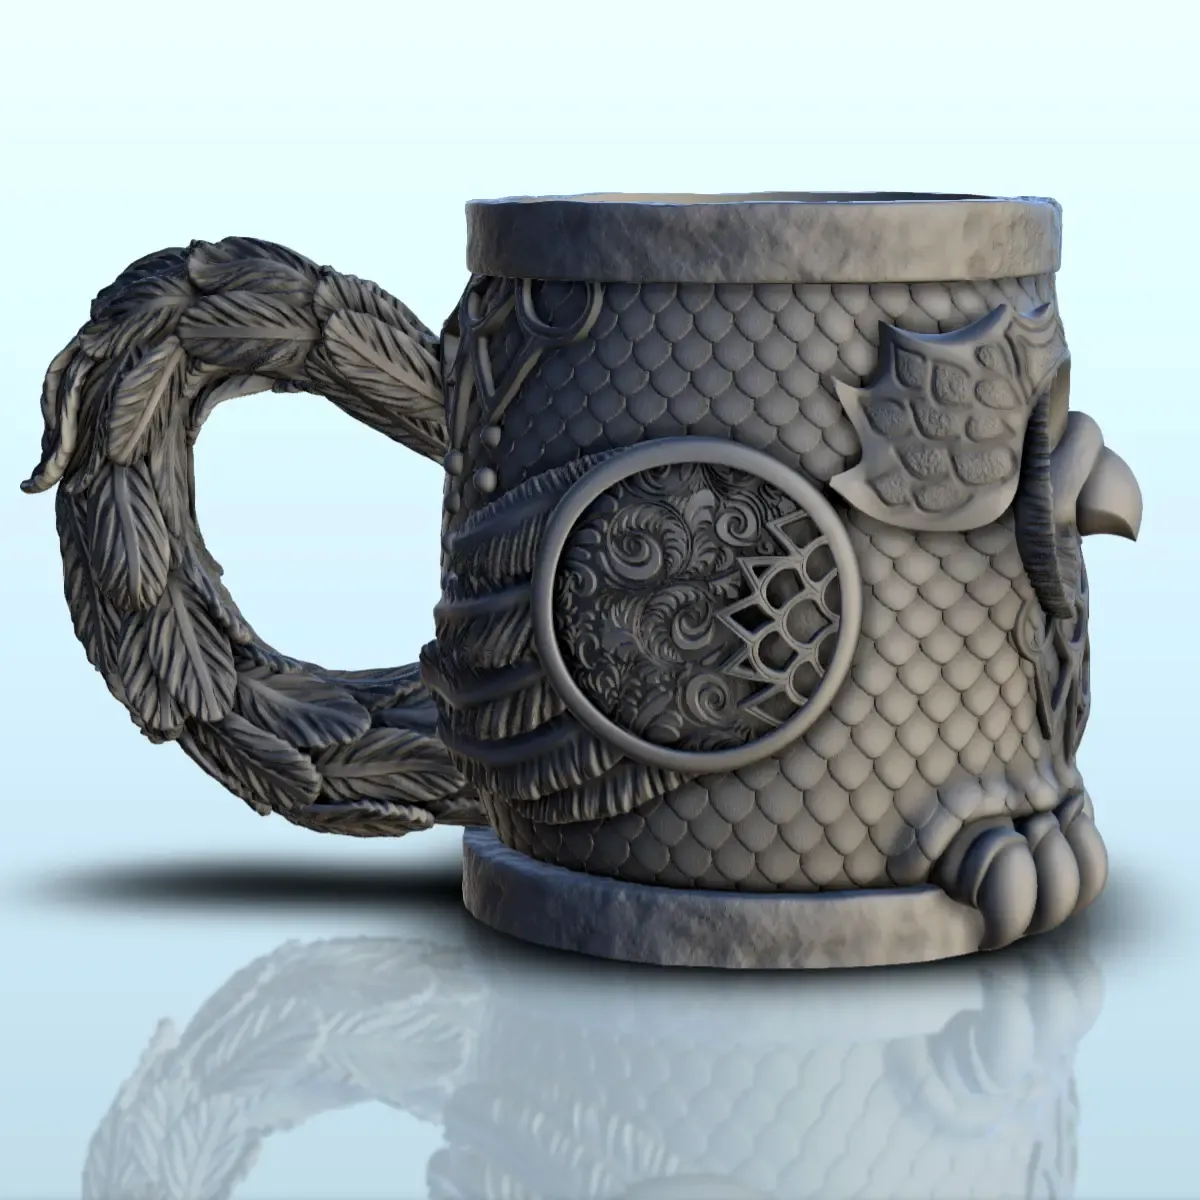 Owl dice mug (20) - beer can holder